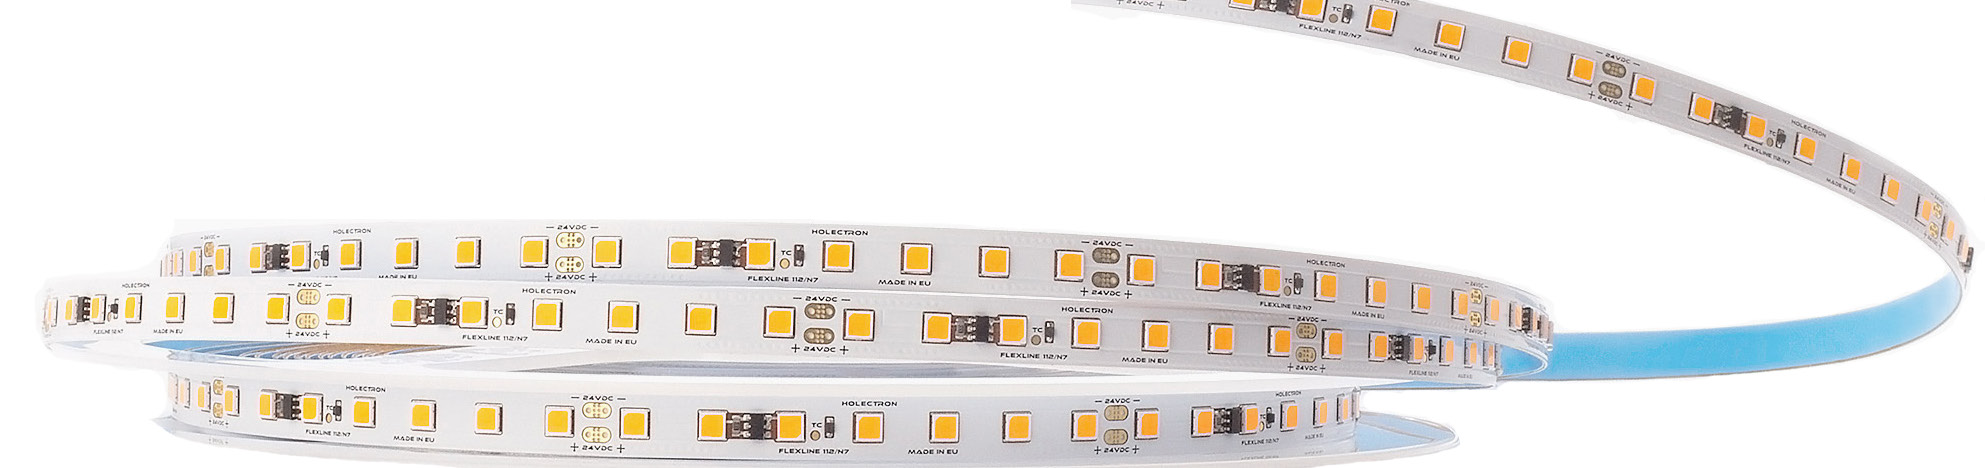 LED-strip PREMIUM Japanska Nichia ligger i framkant när det gäller tillverkning av LED-dioder.